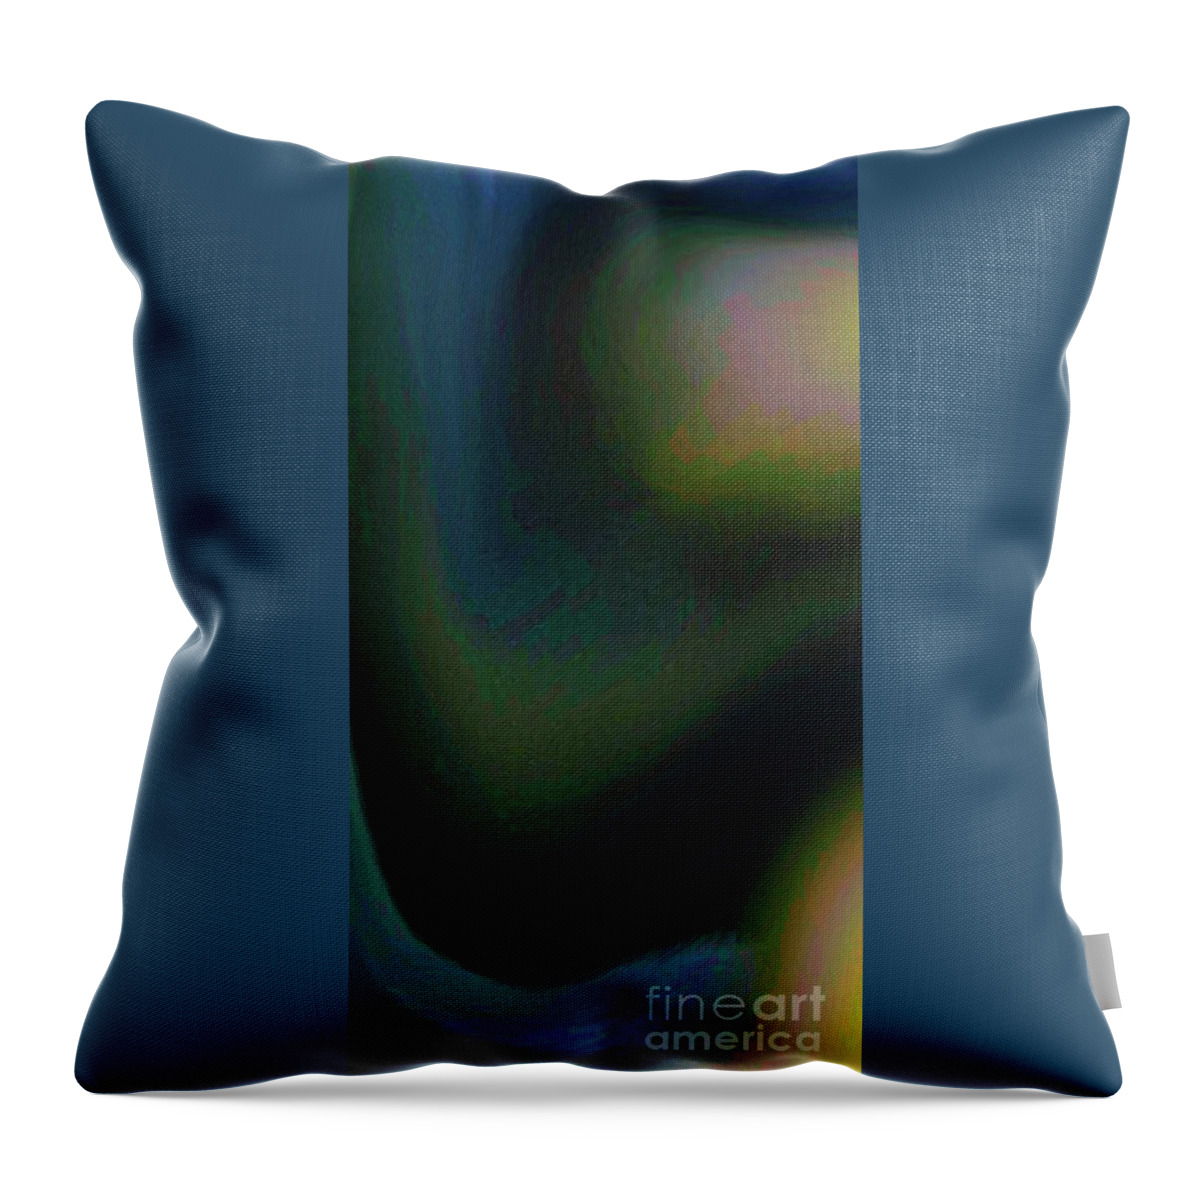 Translucent Throw Pillow featuring the digital art The watcher by Glenn Hernandez